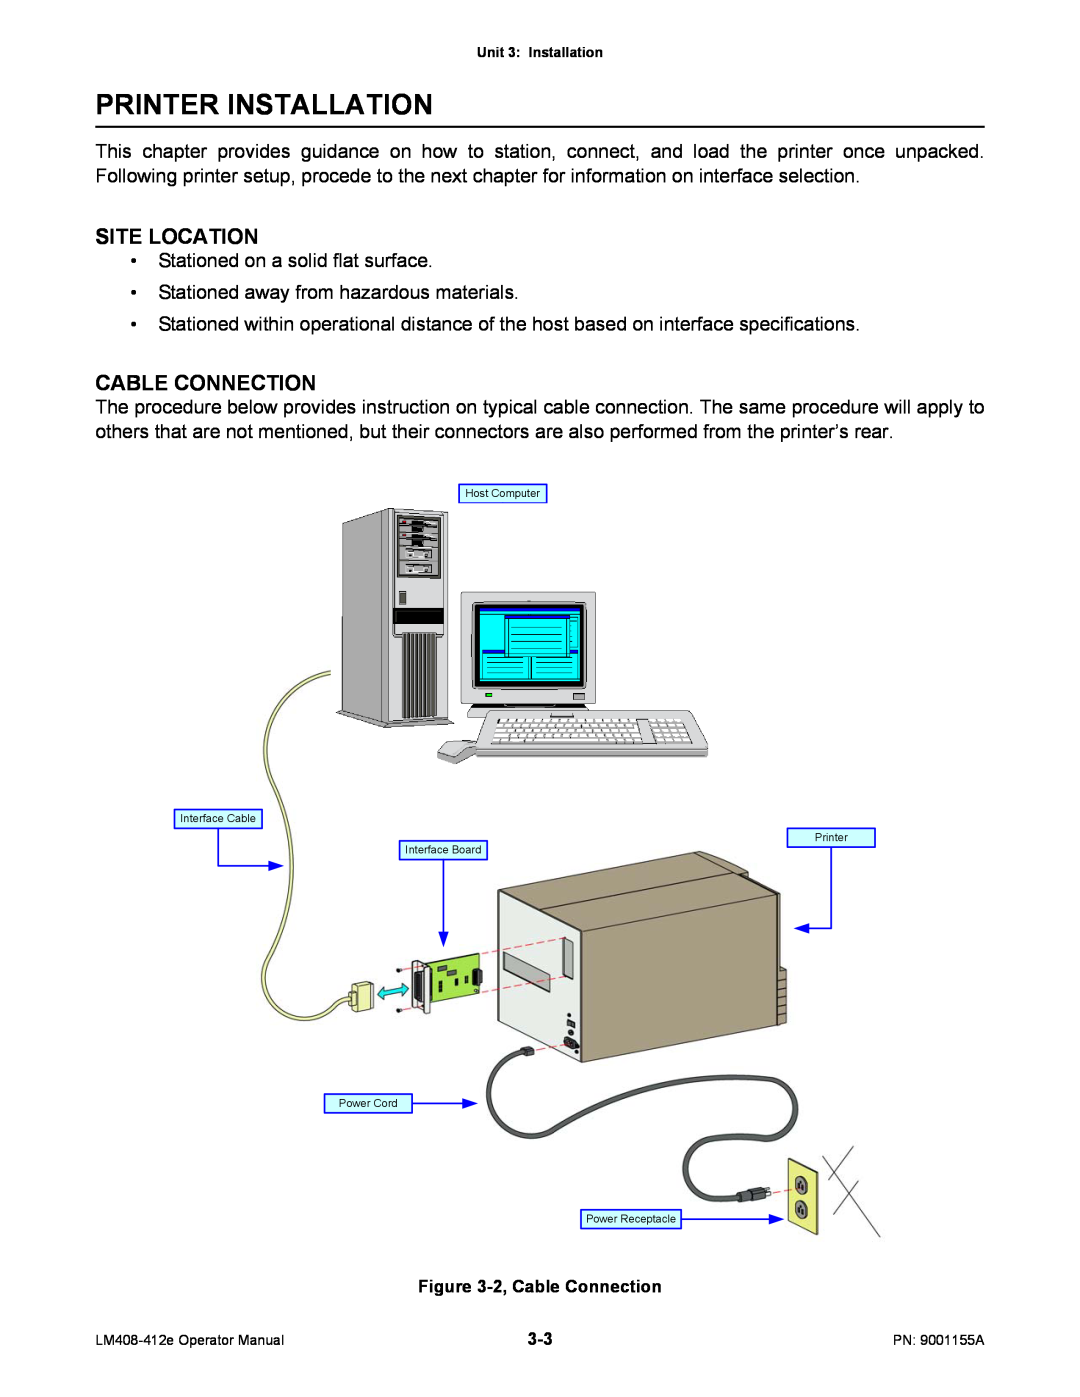 SATO LM408/412E manual Printer Installation, Site Location, Cable Connection 